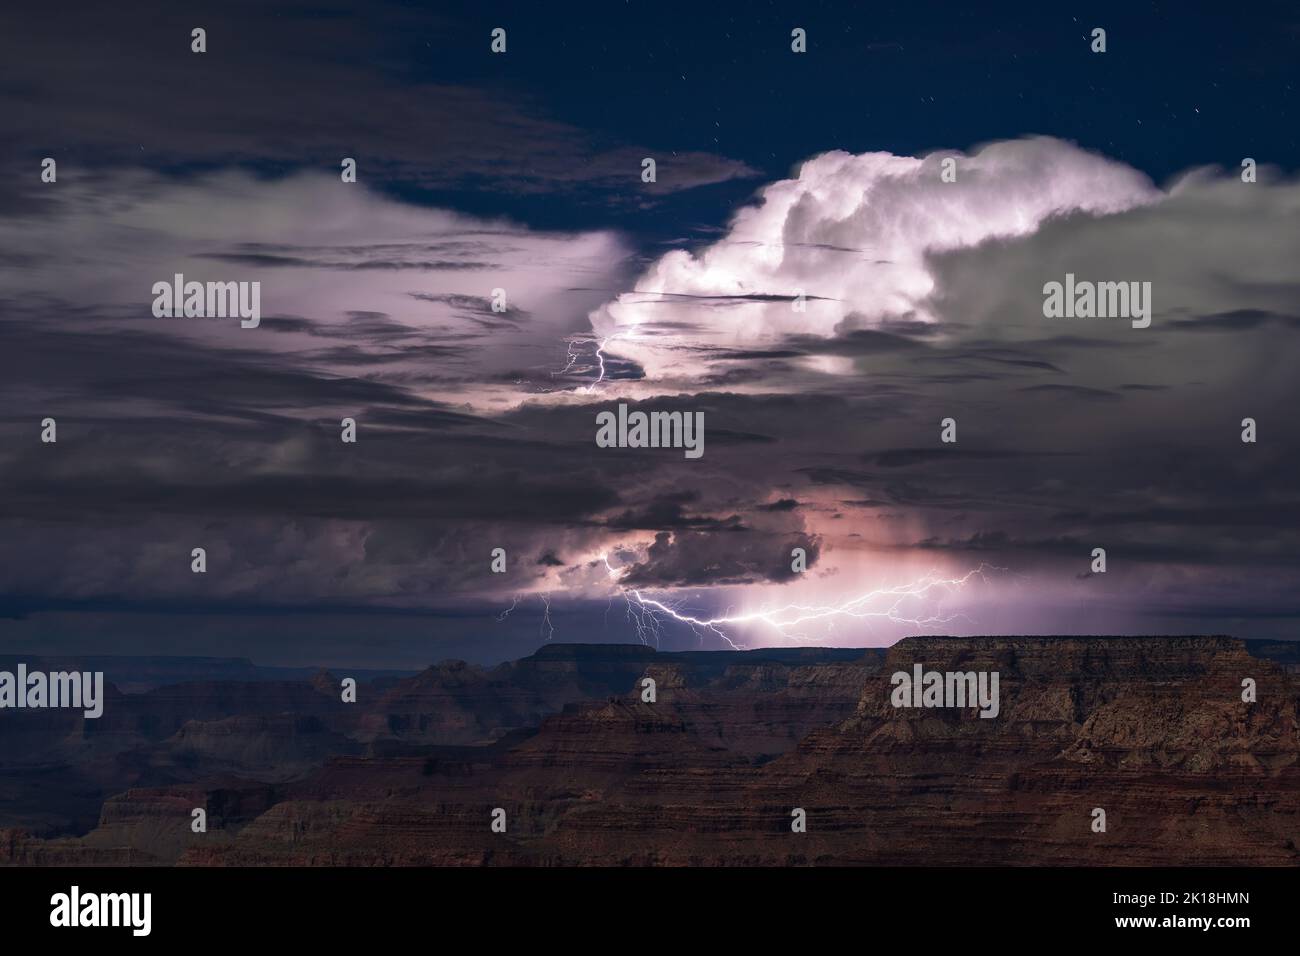 Grand Canyon lightning storm Stock Photo